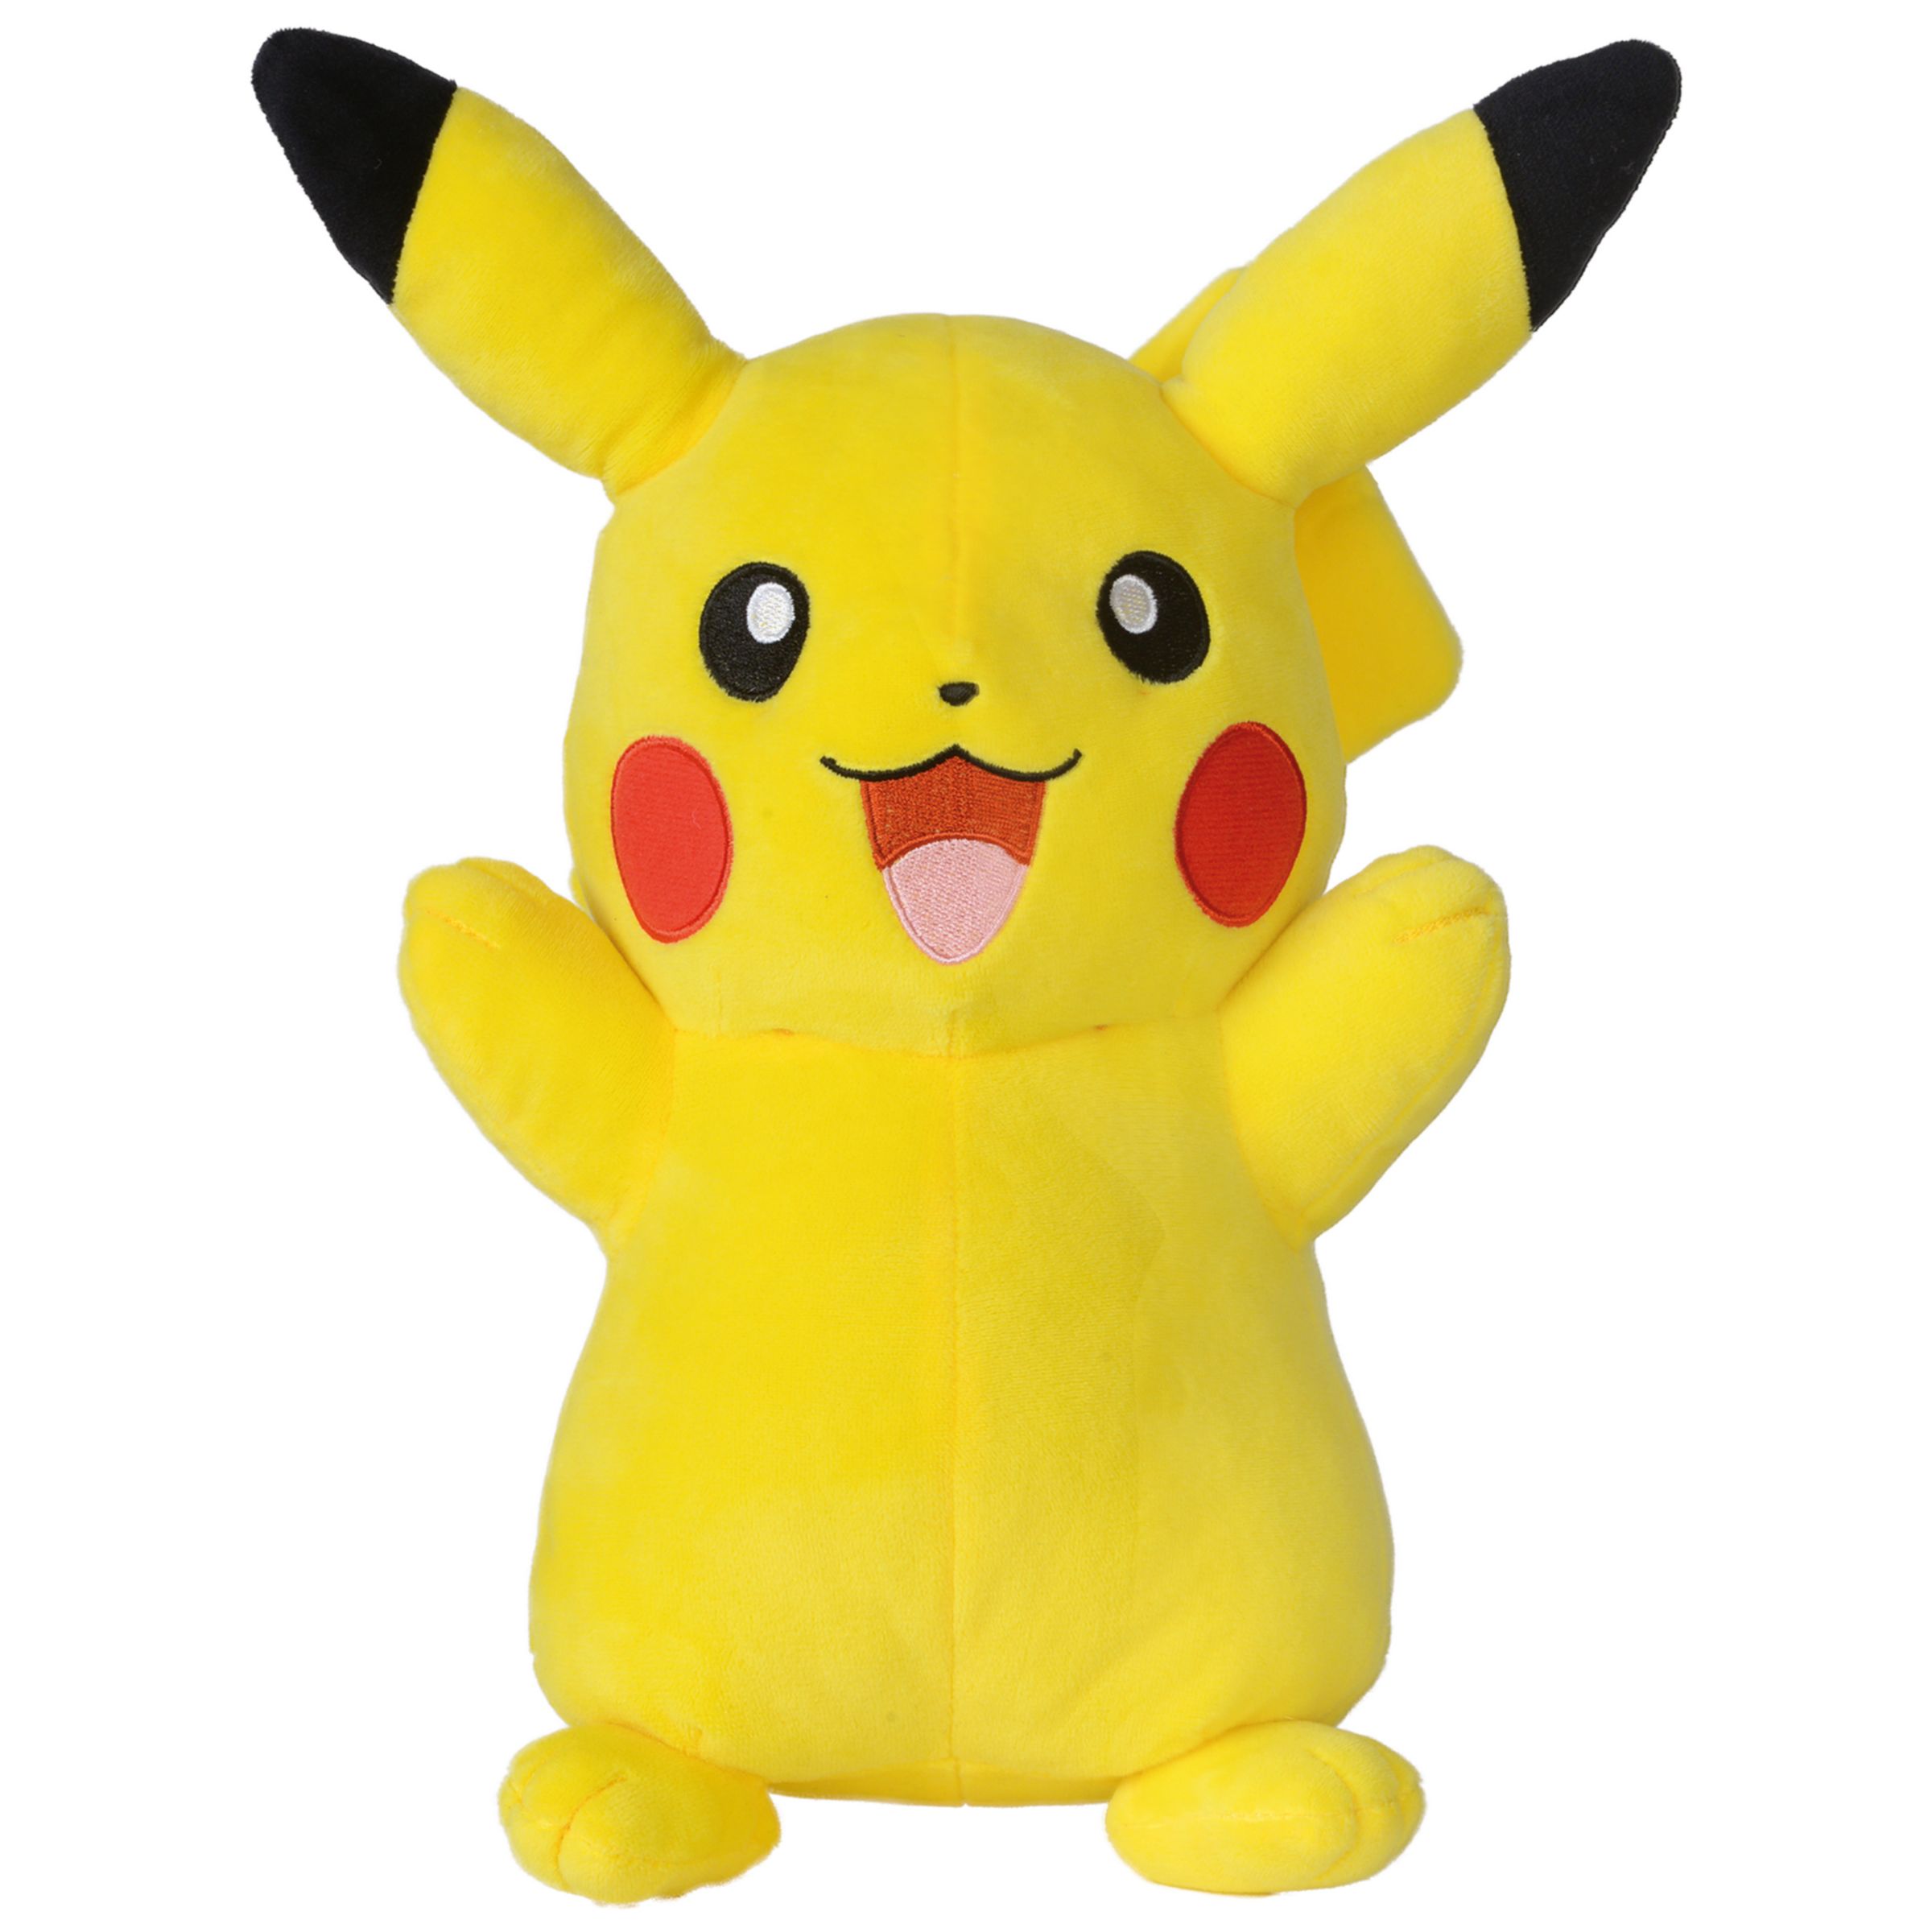 pikachu soft toy online